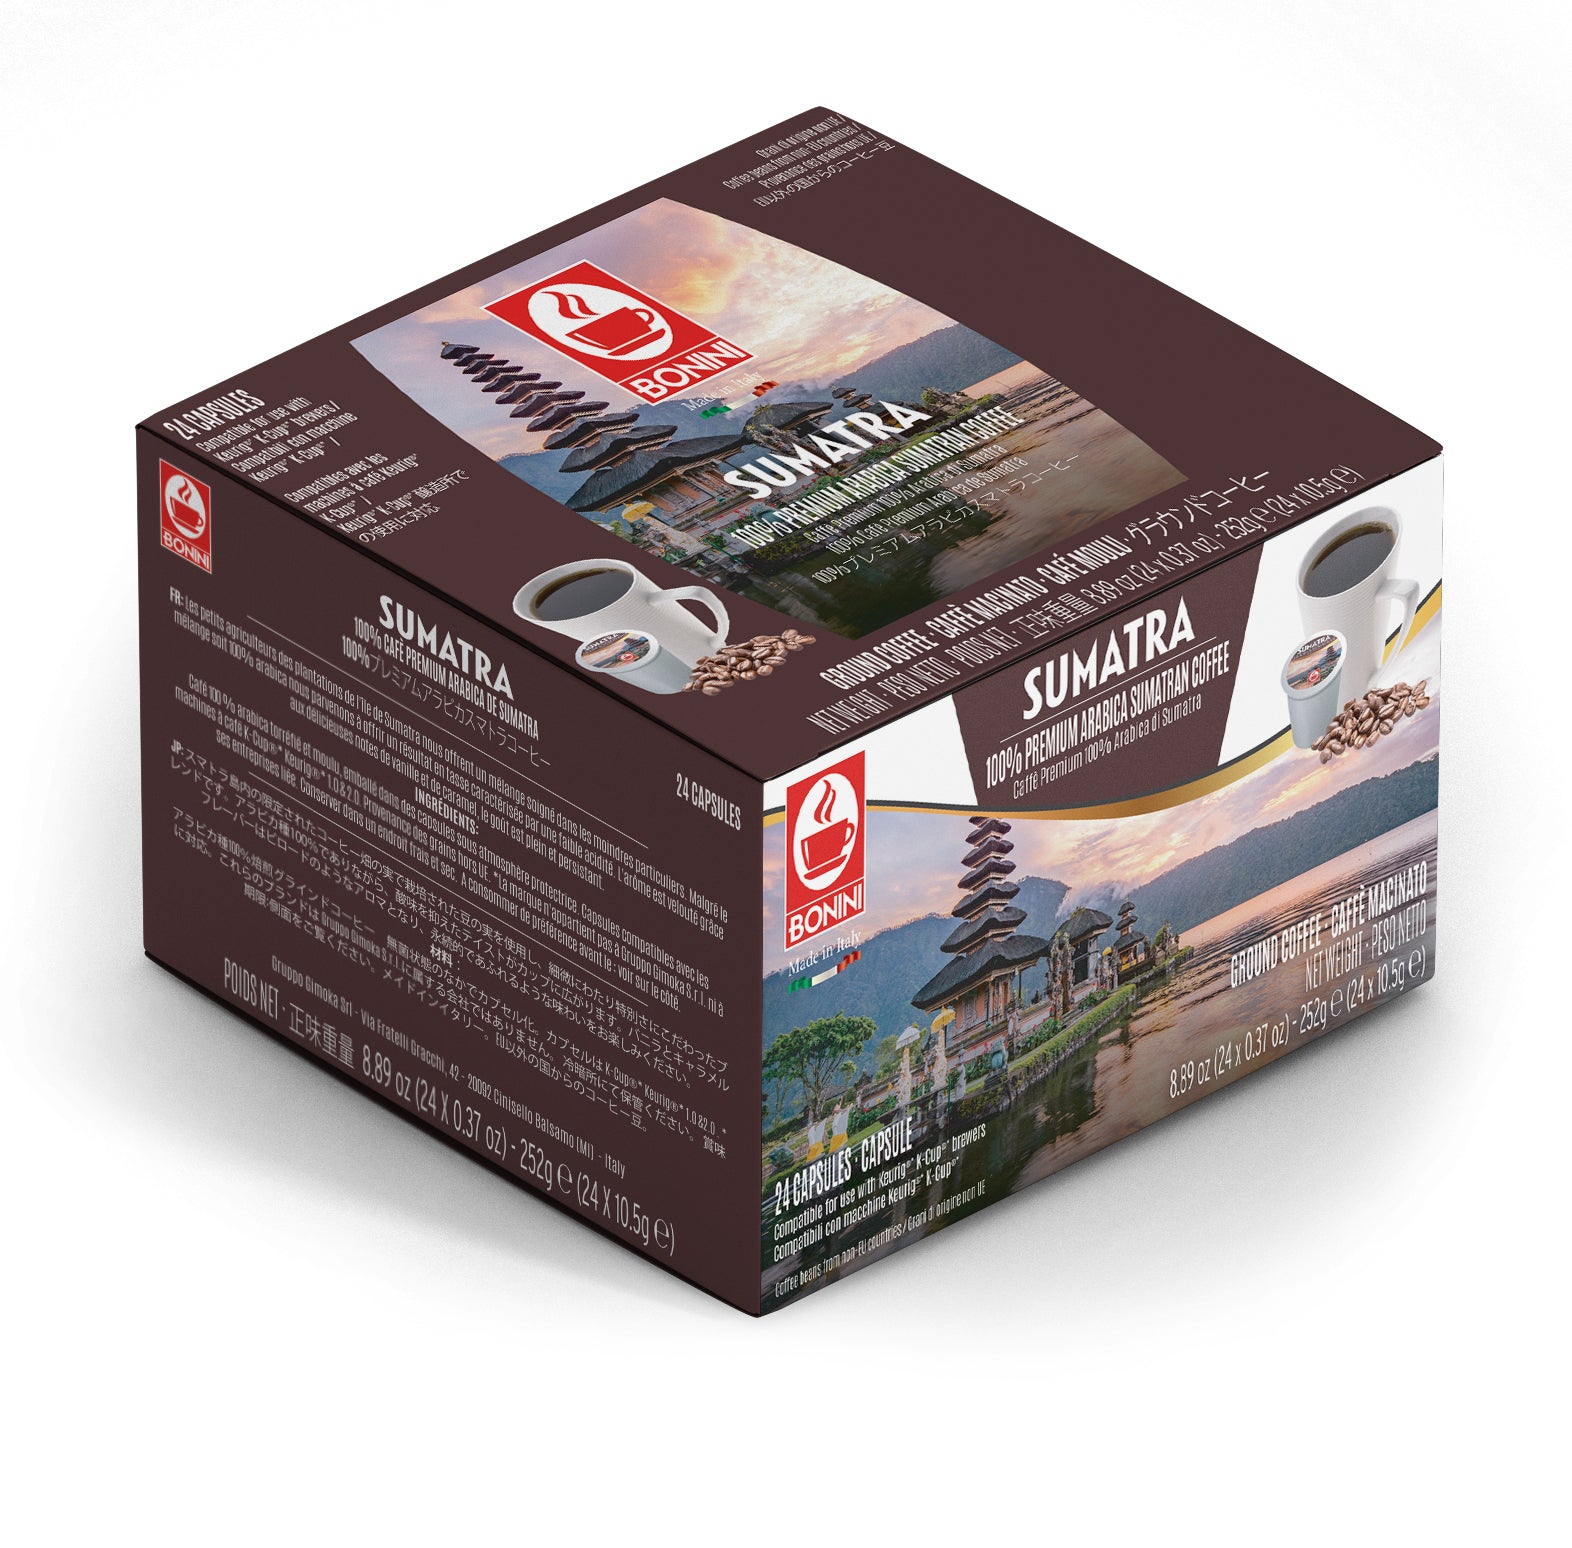 Tiziano Bonini Sumatra Keurig K-Cup Compatible Pods - 24 Pack